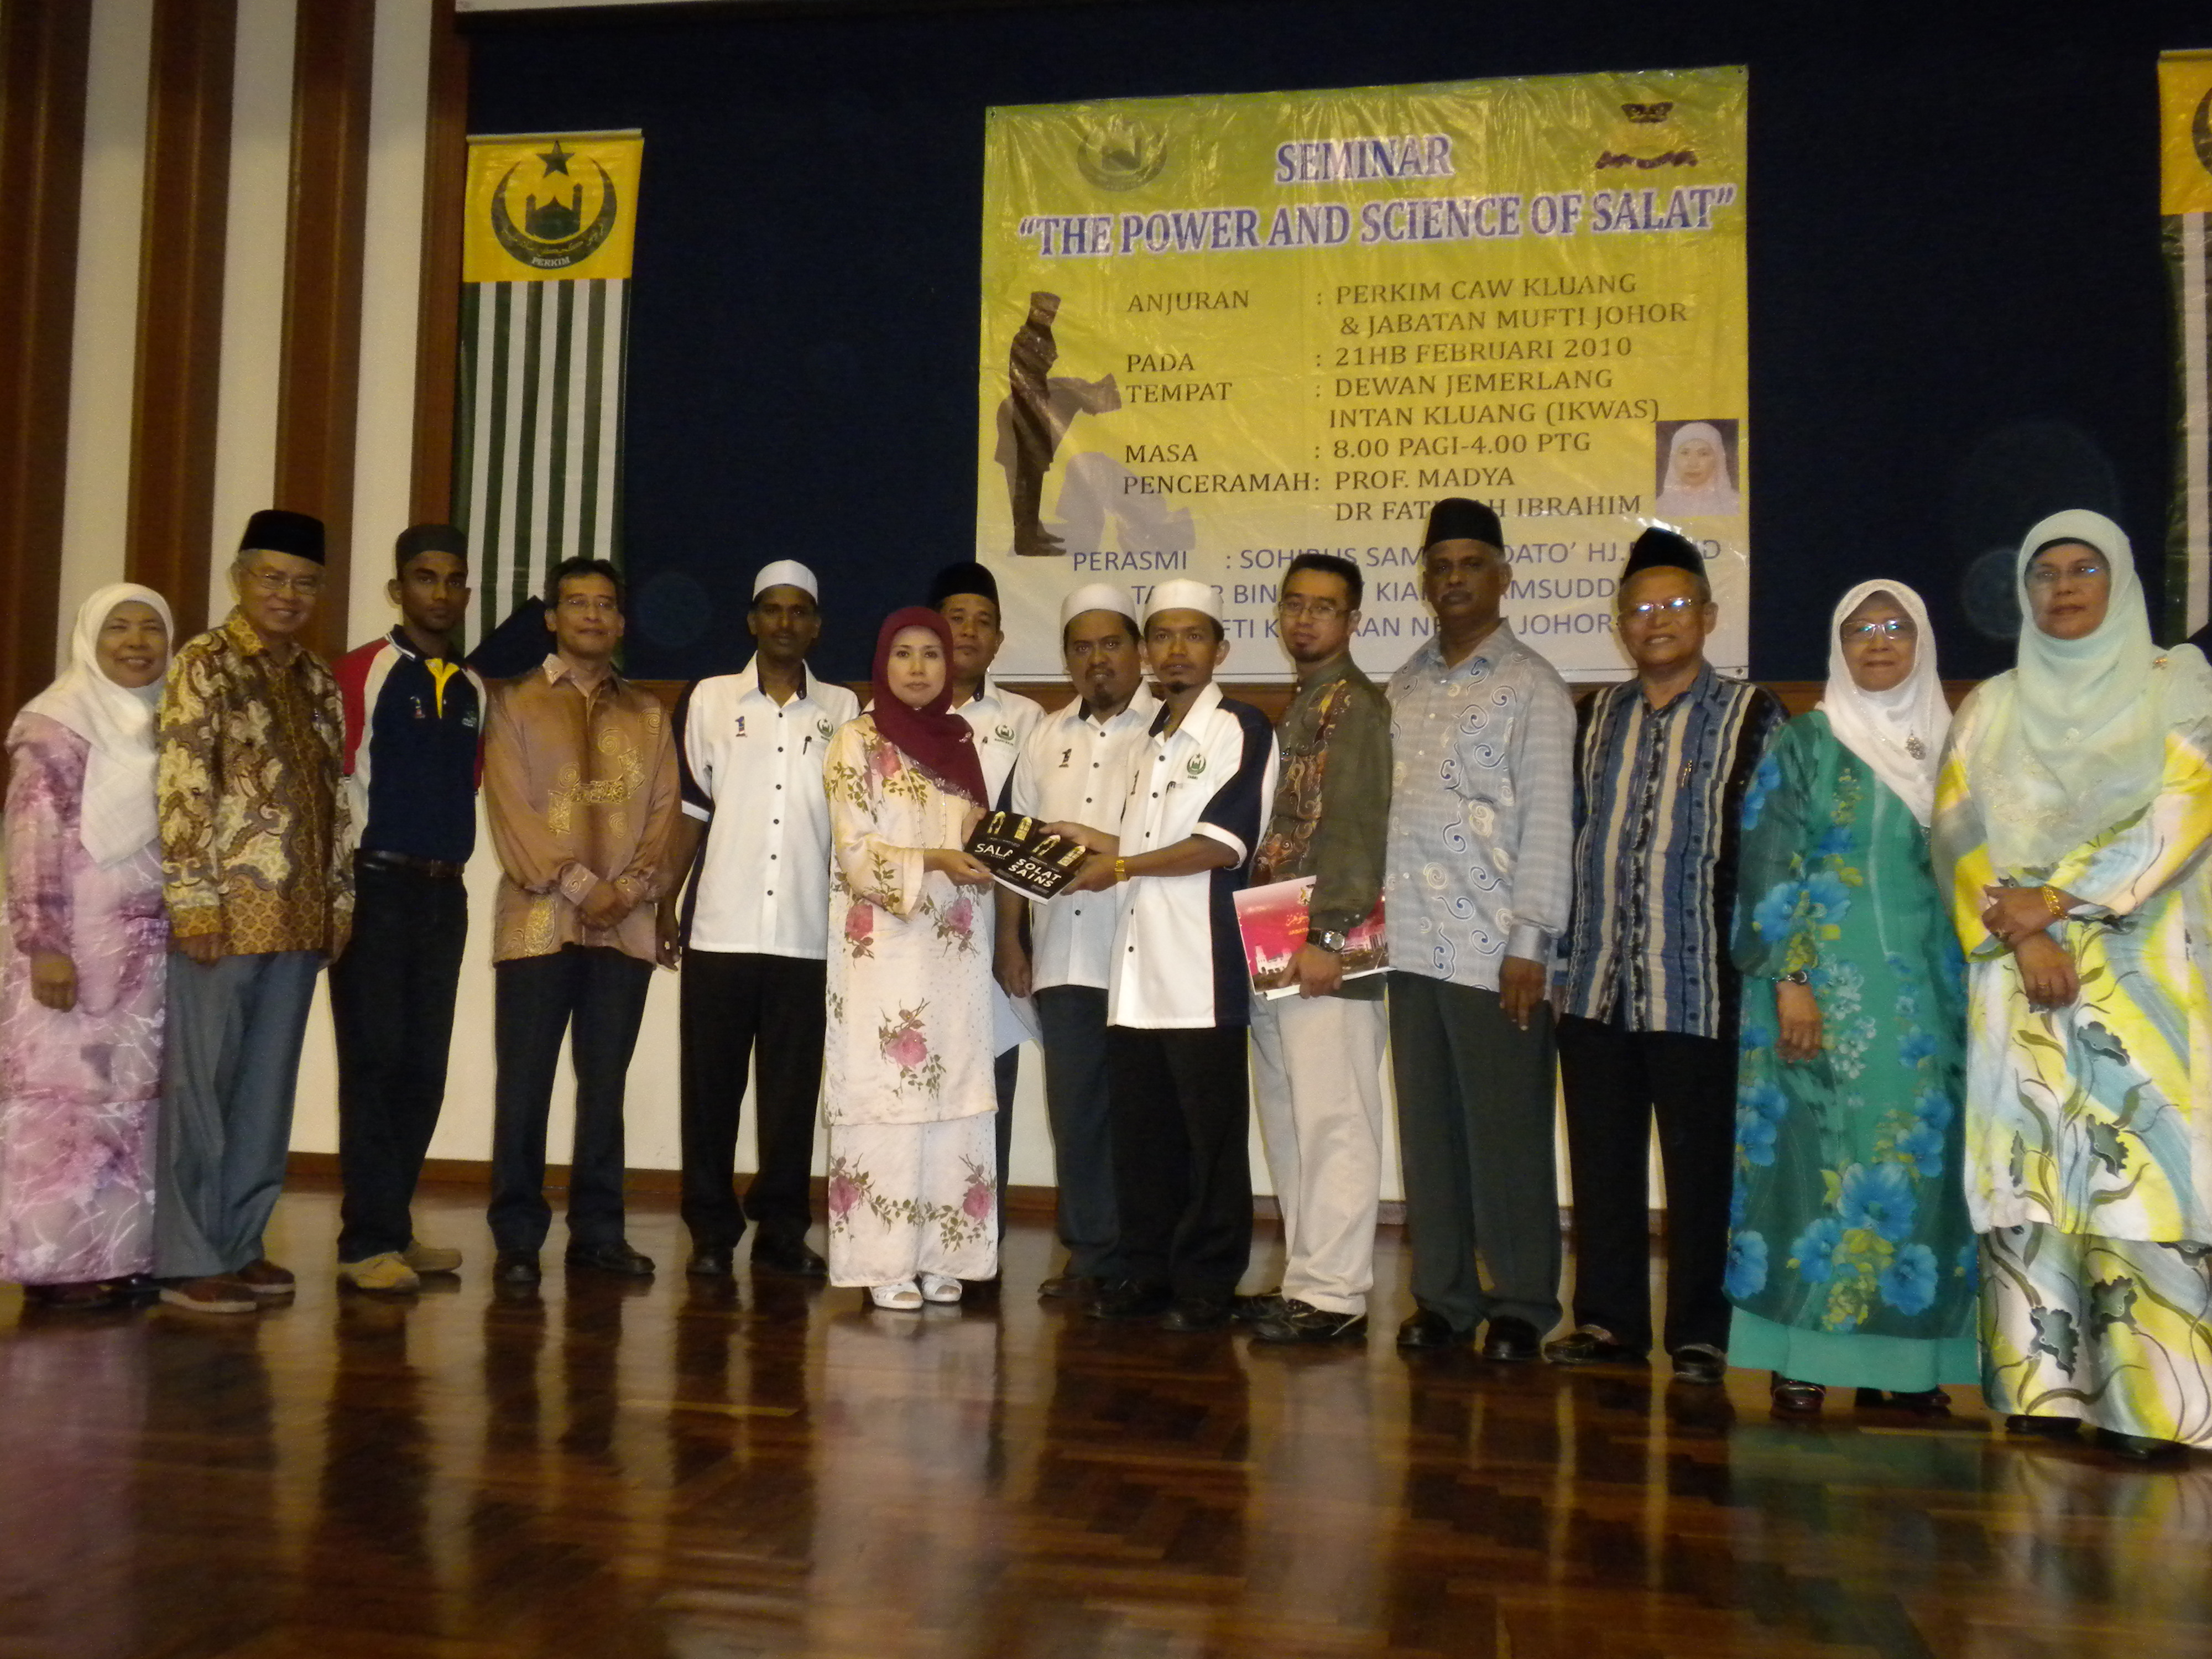 Johor jabatan mufti